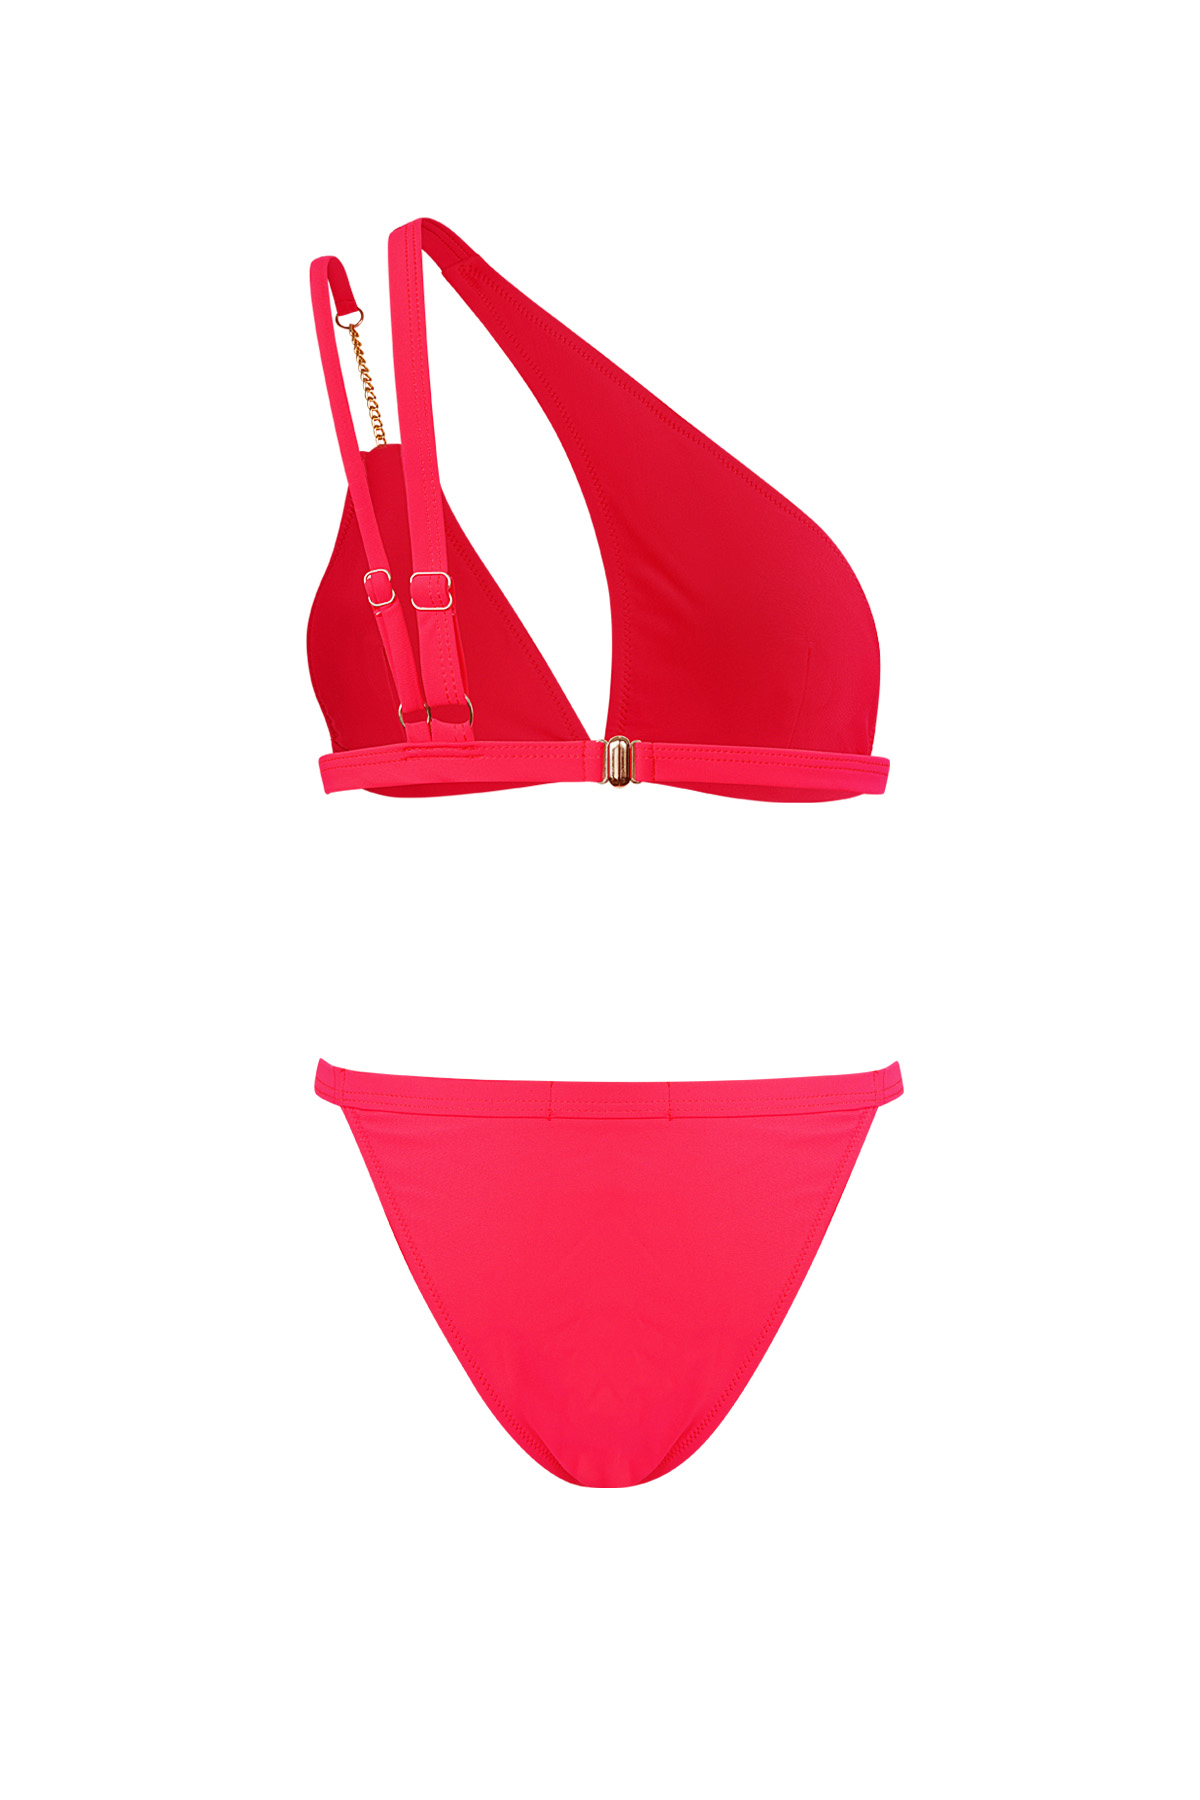 Bikini une épaule - rouge S Image4